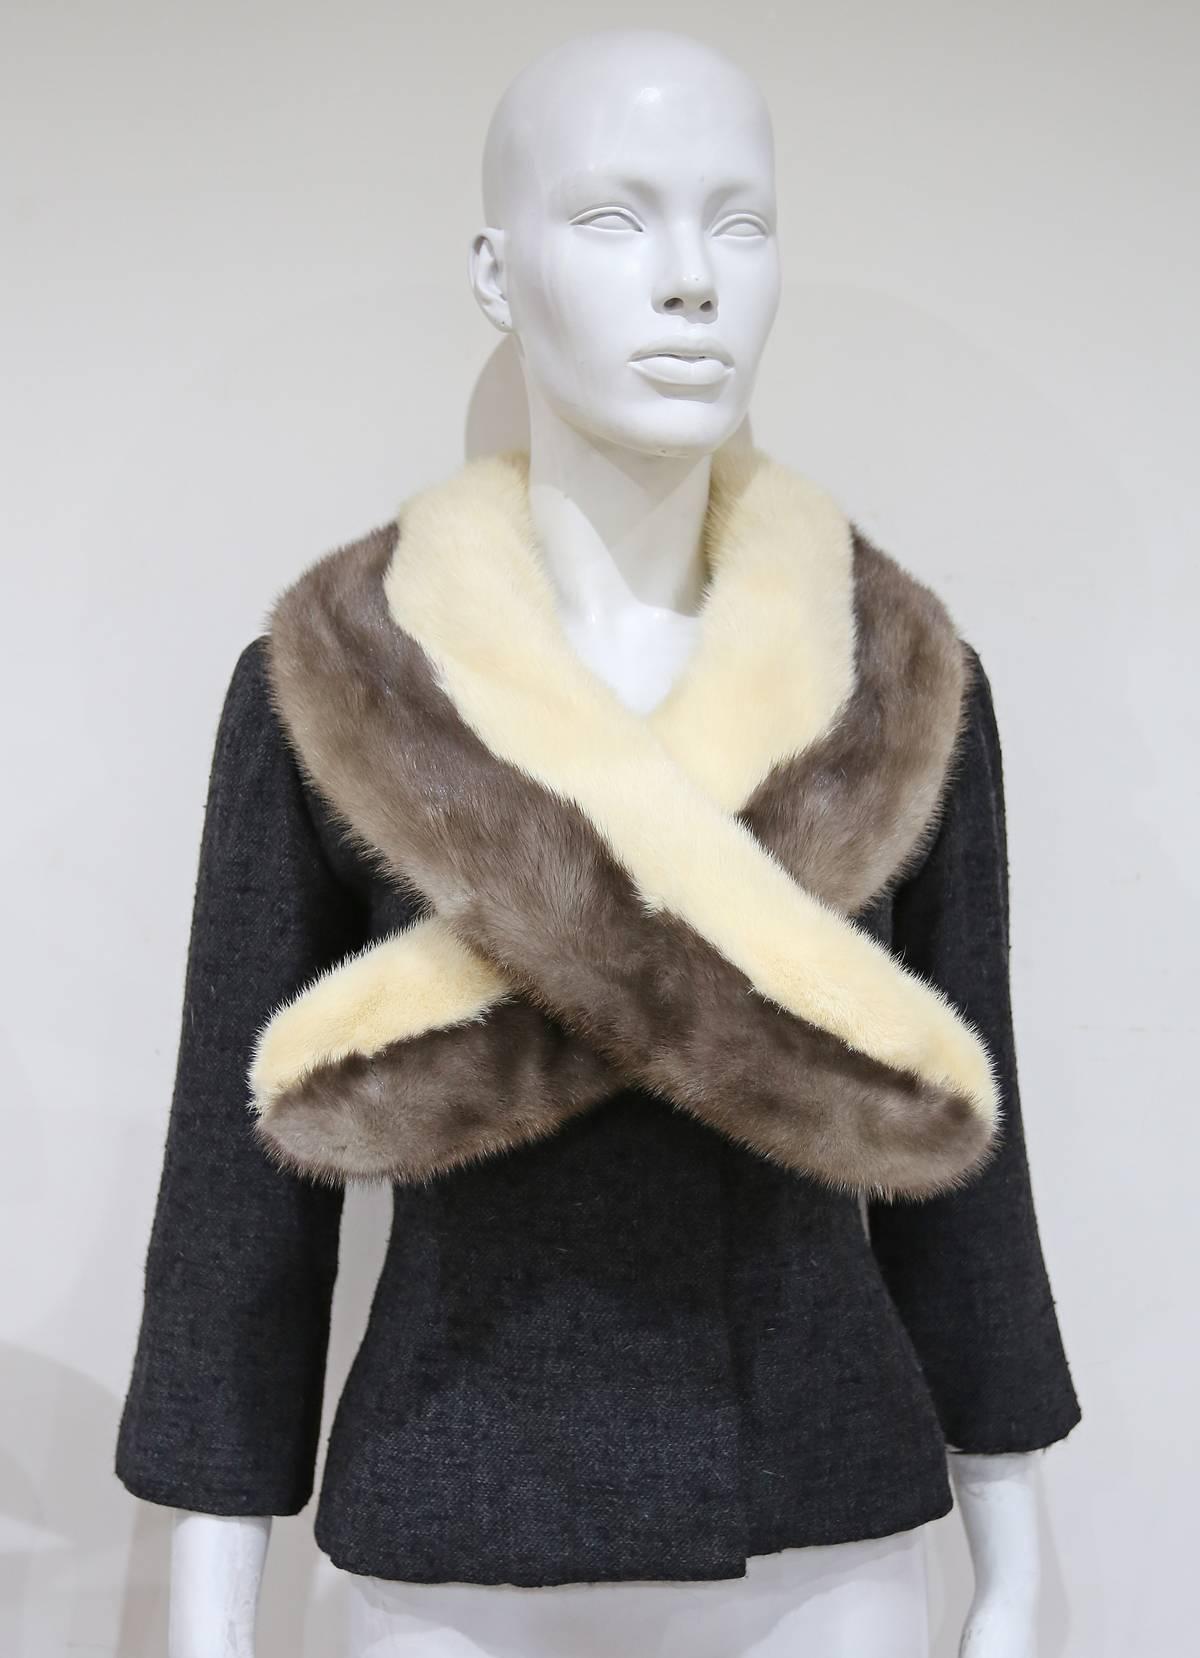 Black Jeanne Lanvin by Castillo tailored woollen jacket with mink fur scarf, c. 1950s For Sale